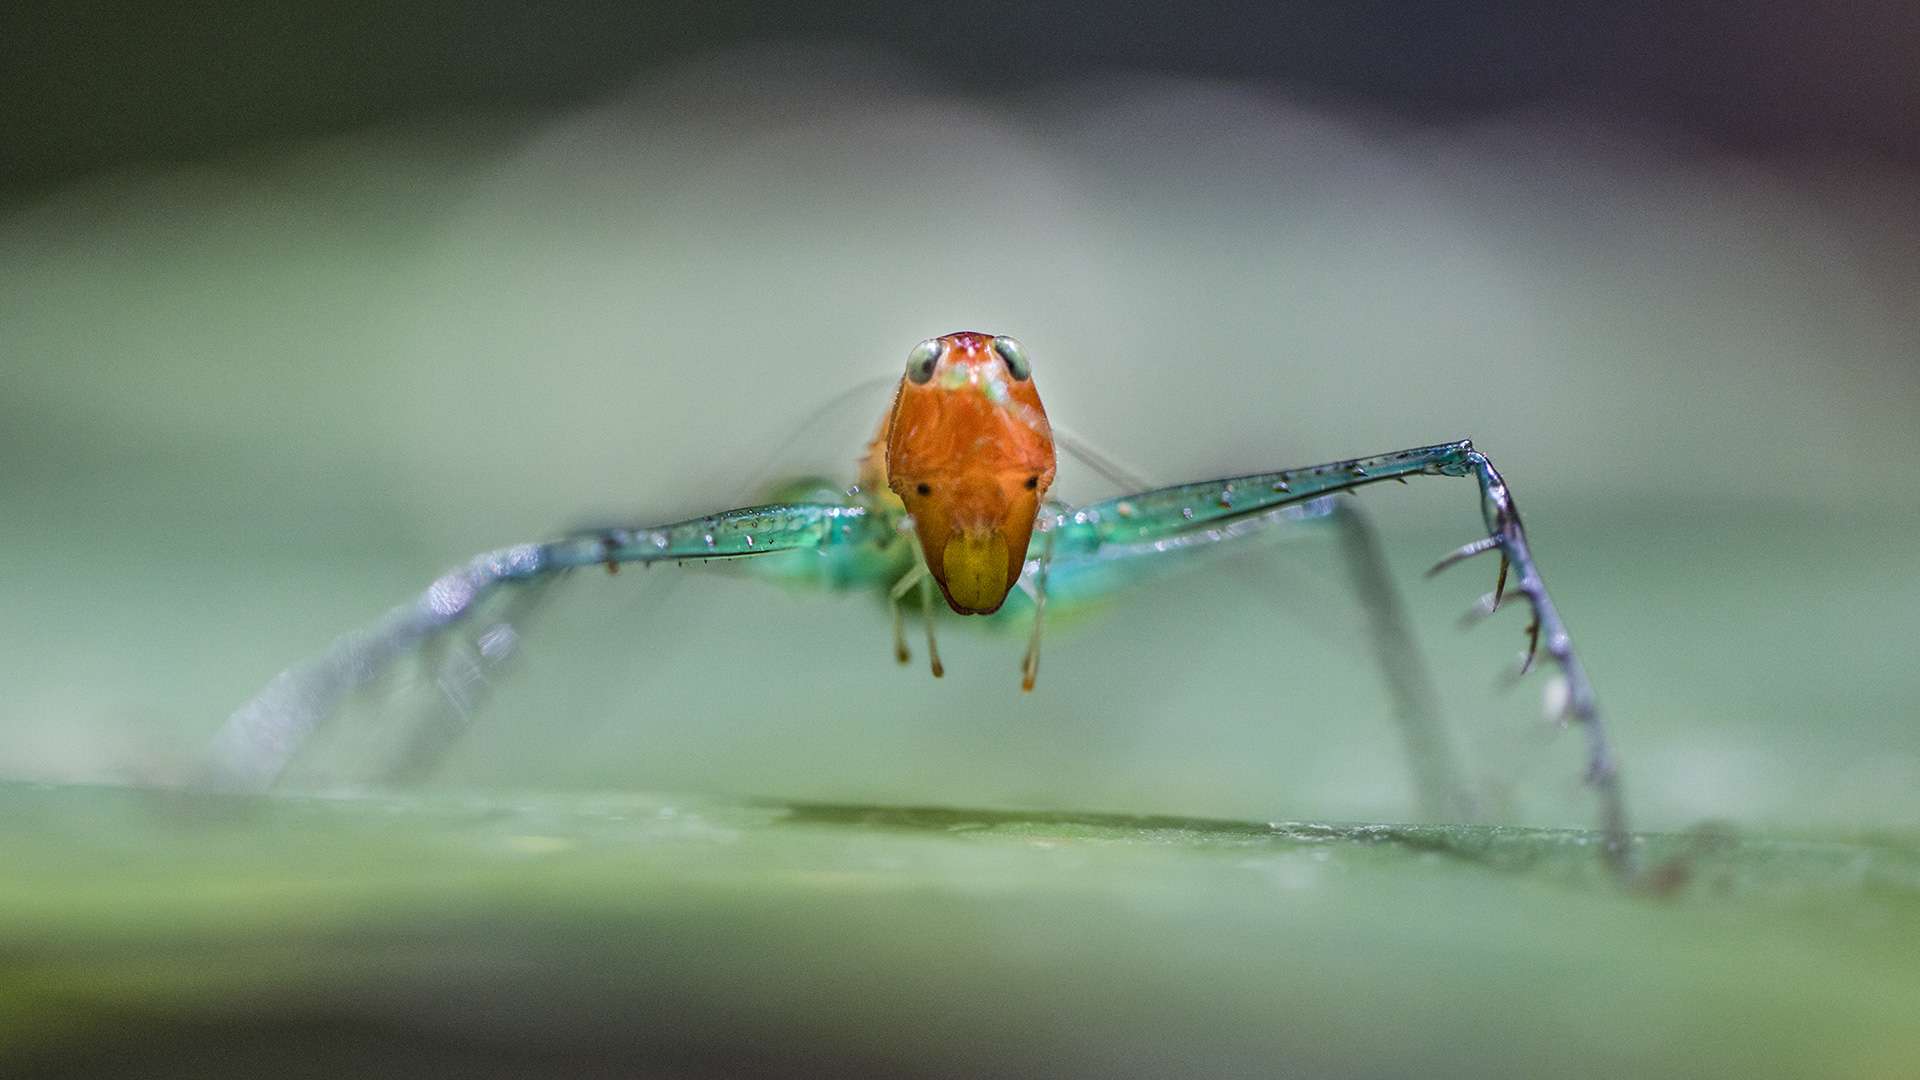 Gilles Martin's photograph of a grasshopper from Costa Rica